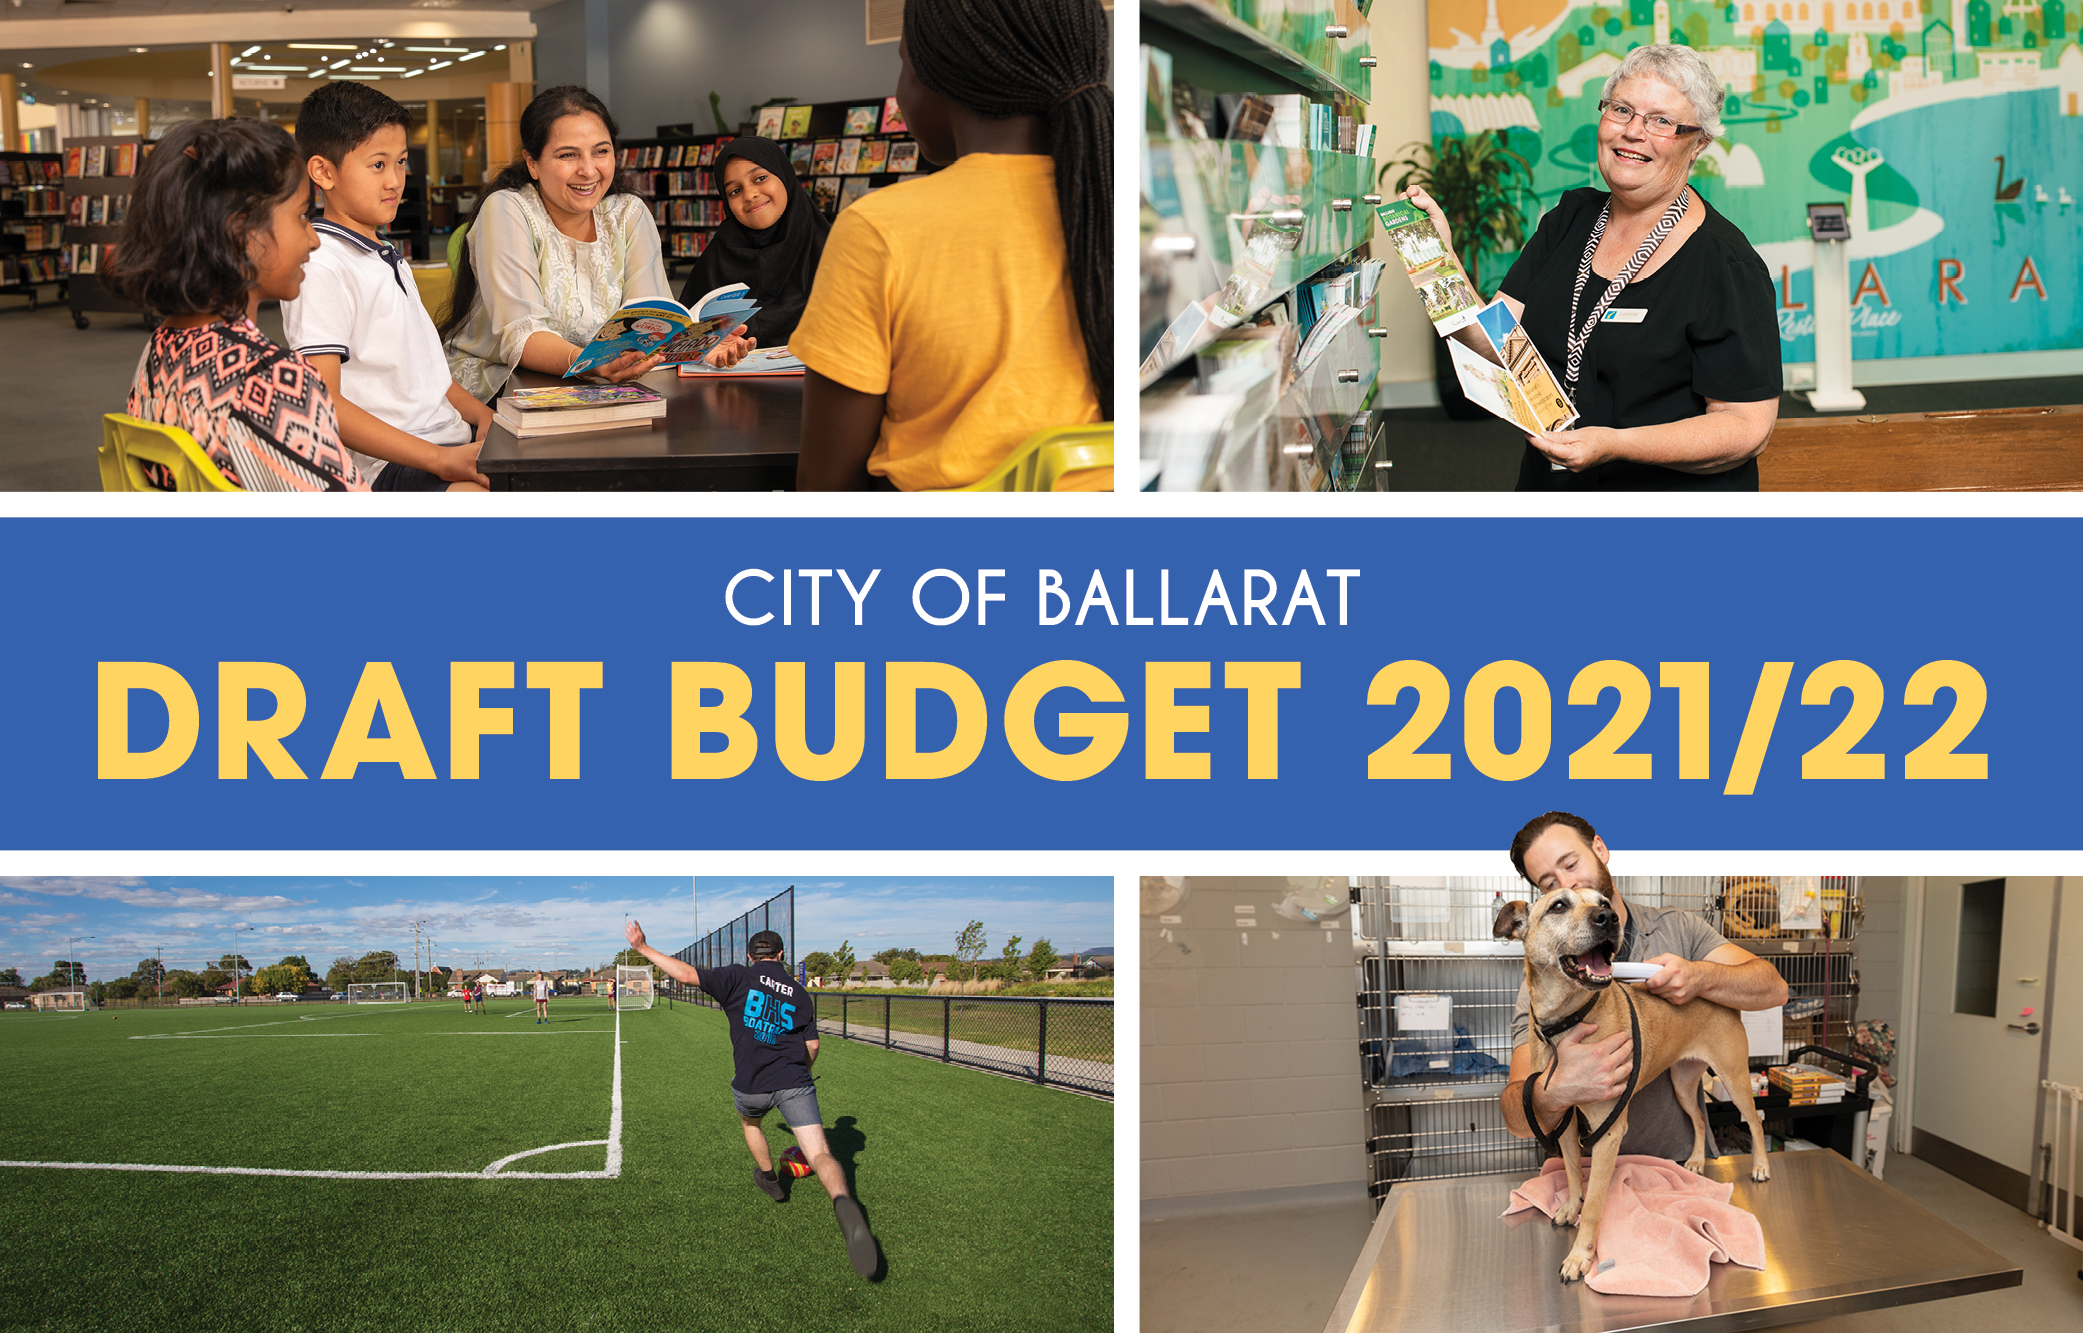 City of Ballarat 2021/22 Draft Budget graphic tile 